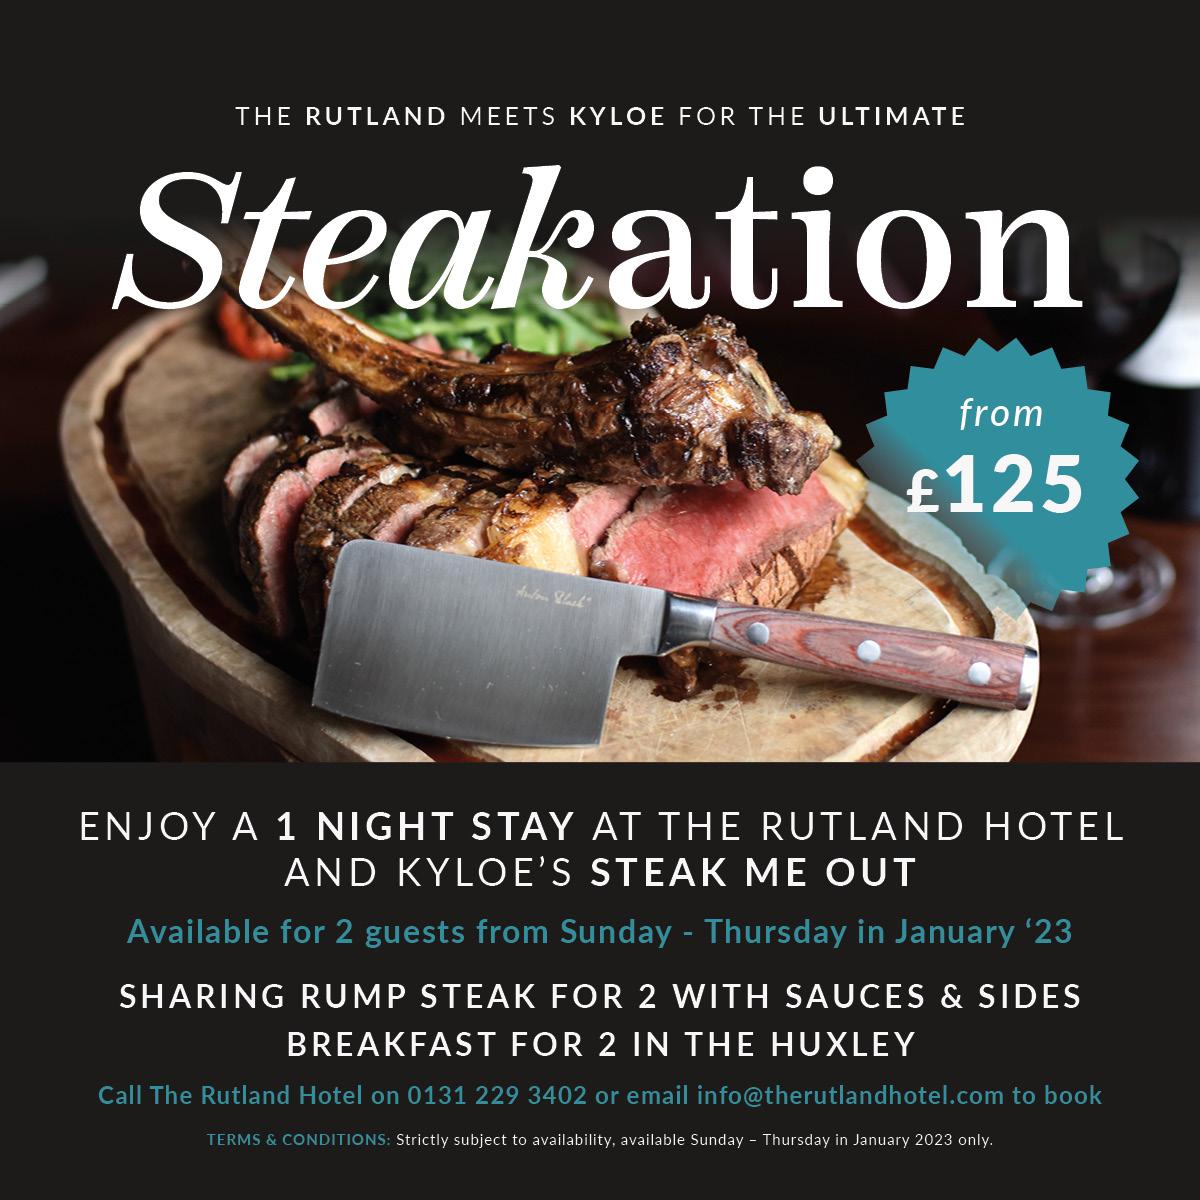 Steak-ation Deal Rutland Hotel January 2023